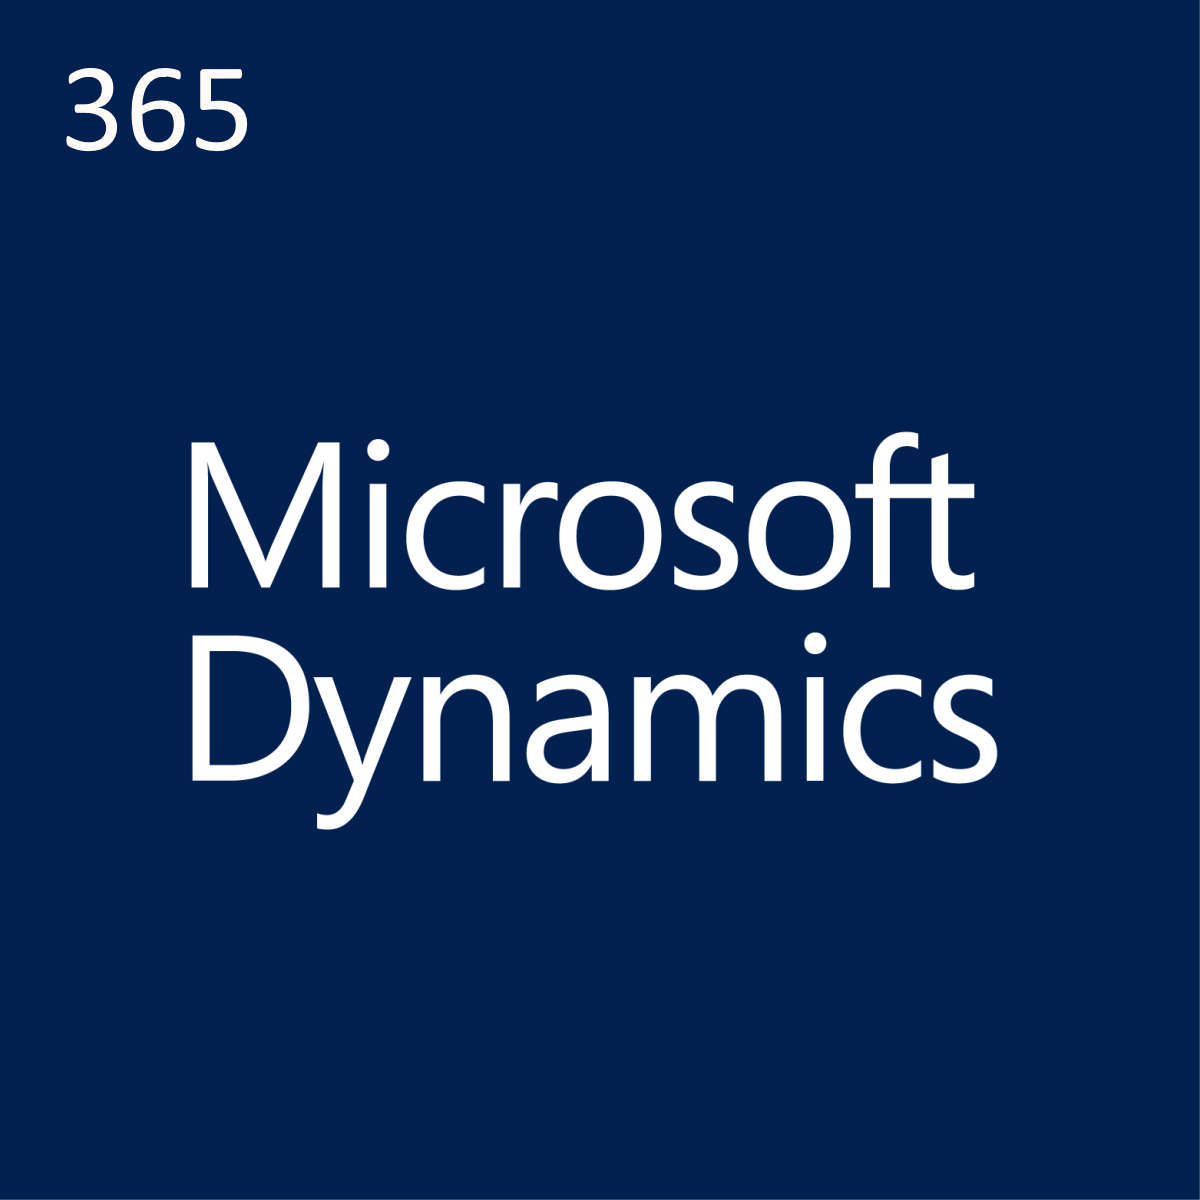 Microsoft Dynamcis 365